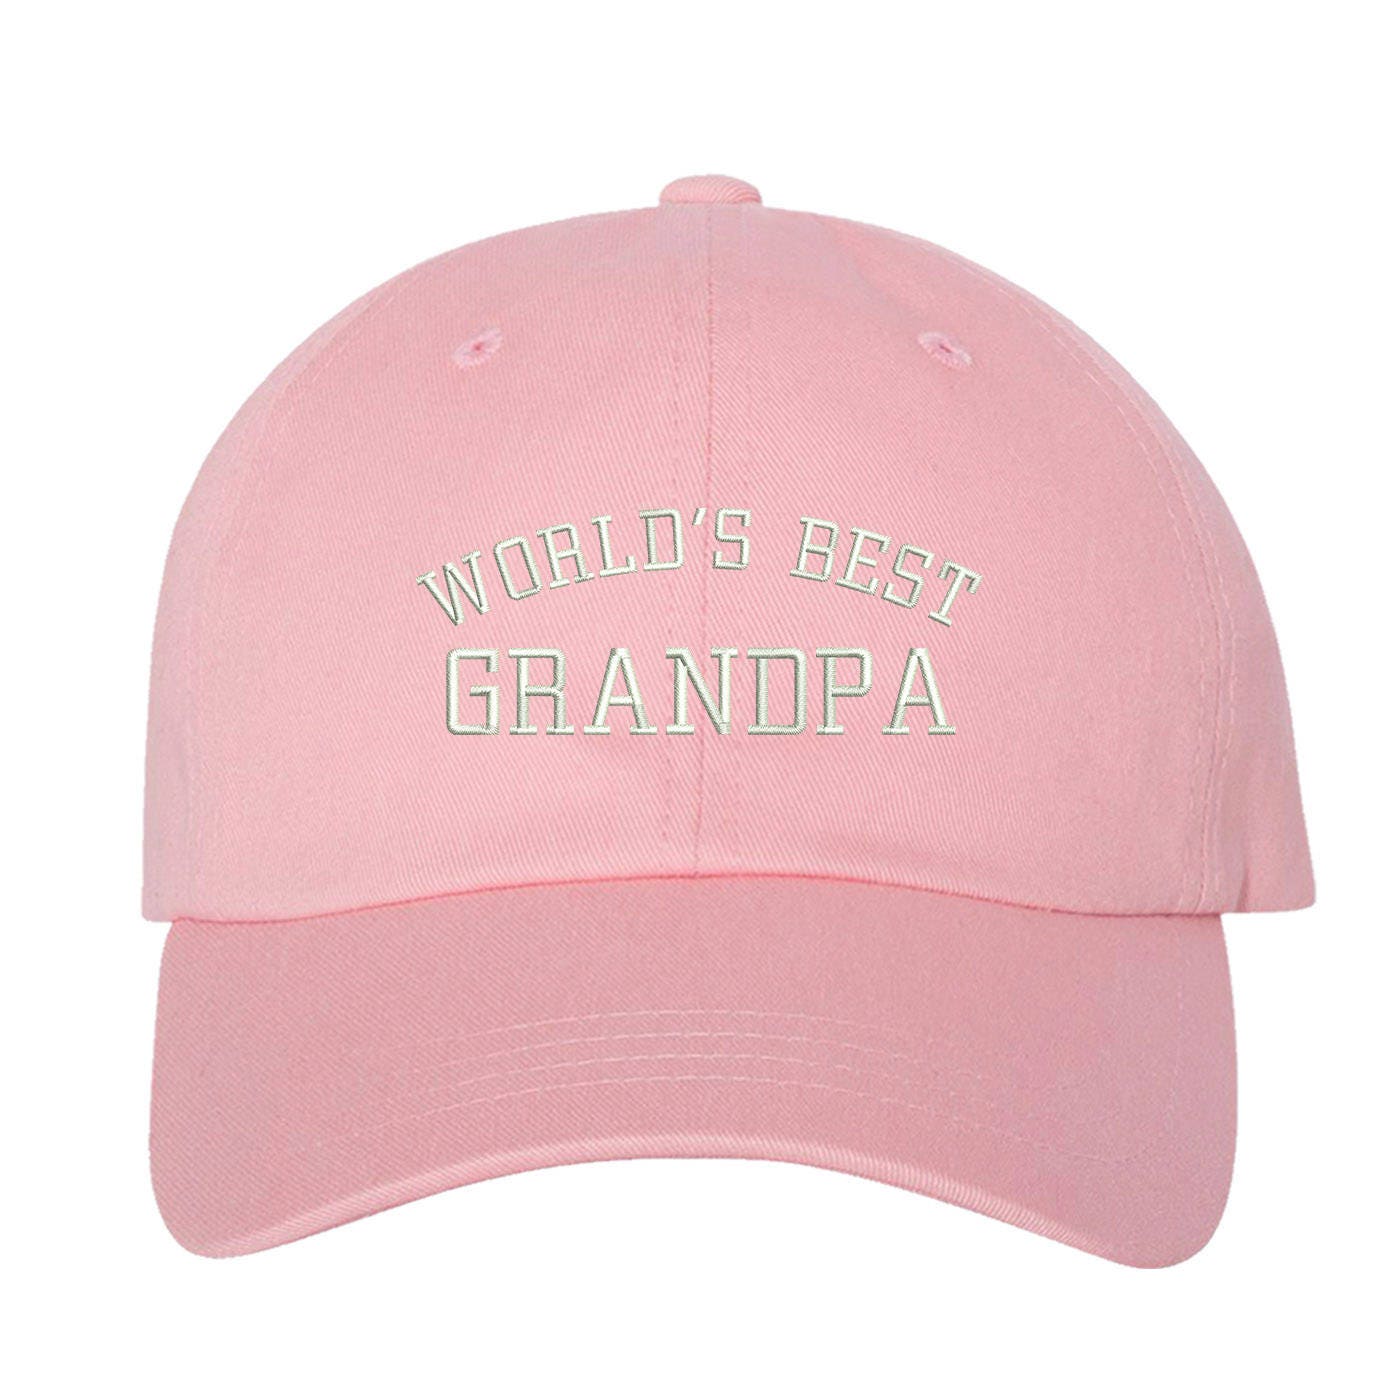 Worlds Best Grandpa Dad Hat Embroidered Baseball Cap